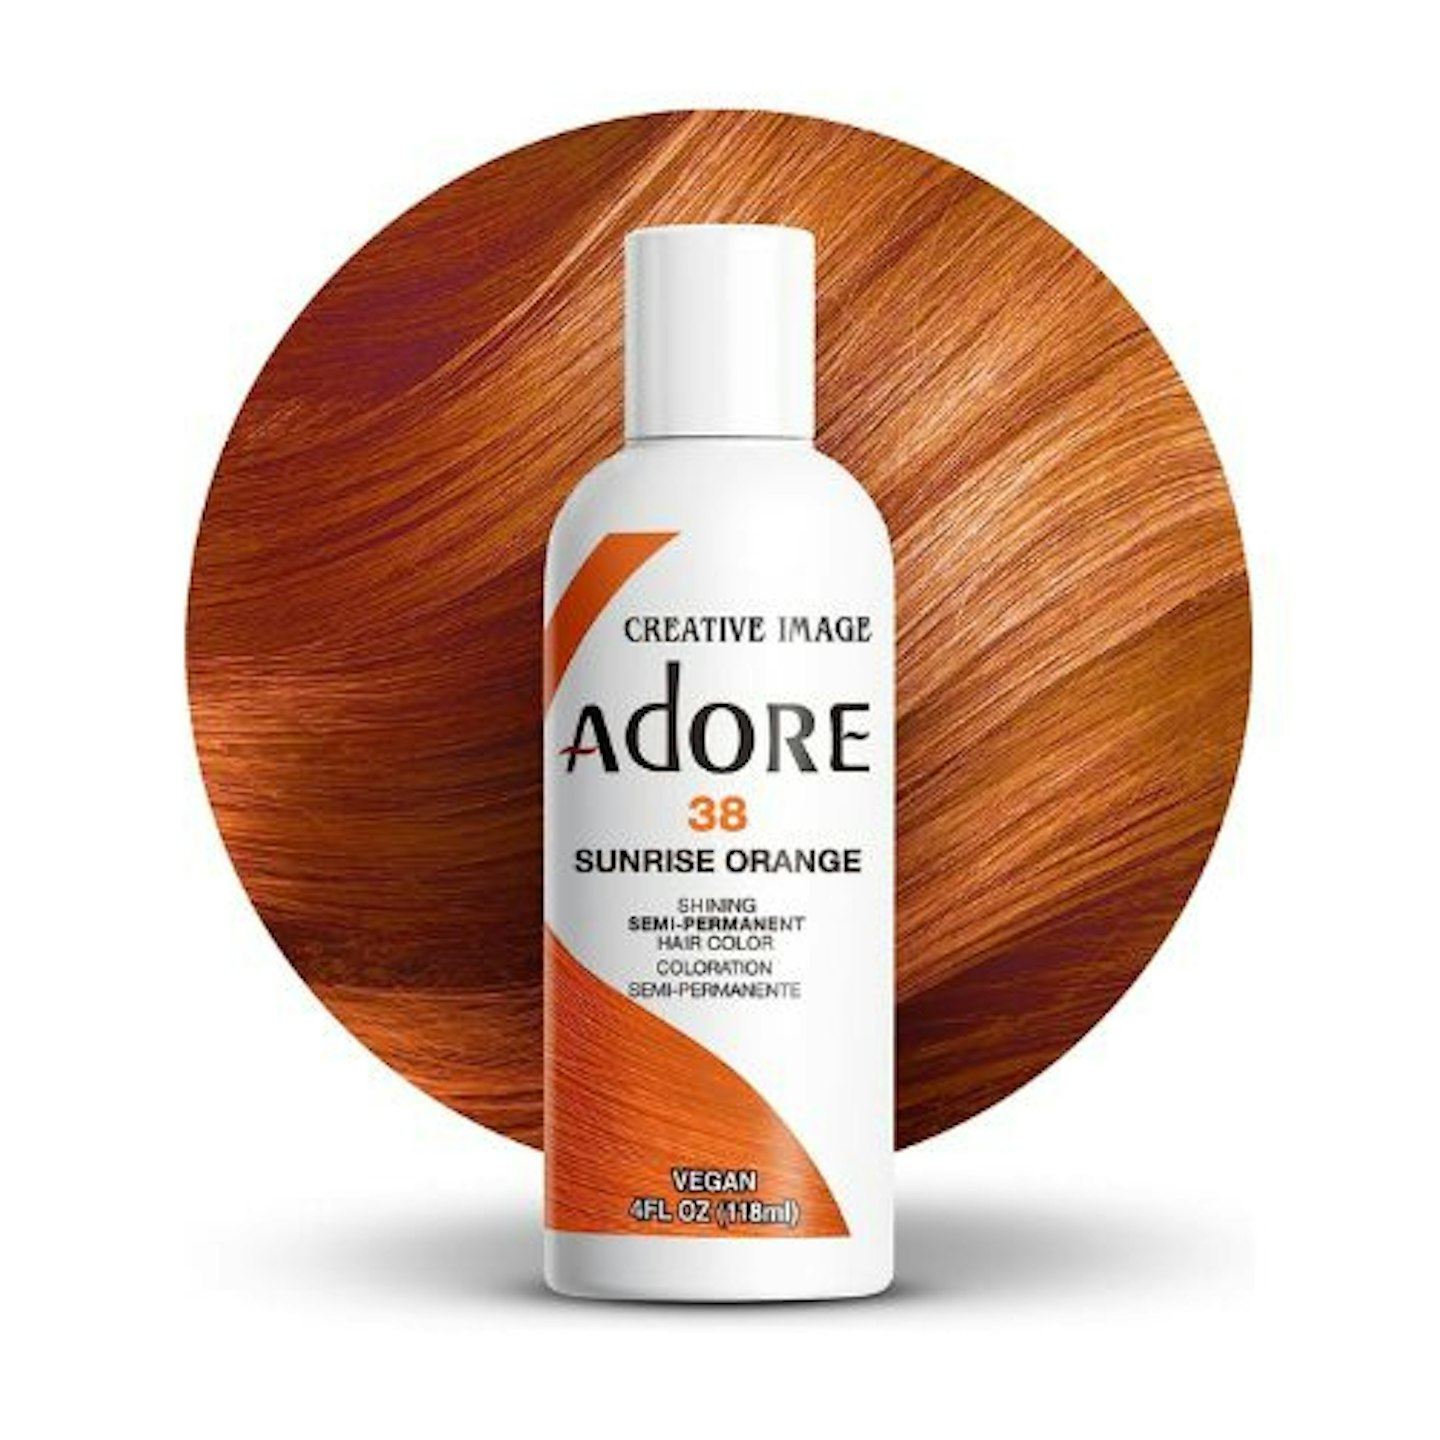 Adore Shining Semi Permanent Hair Colour, 38 Sunrise Orange